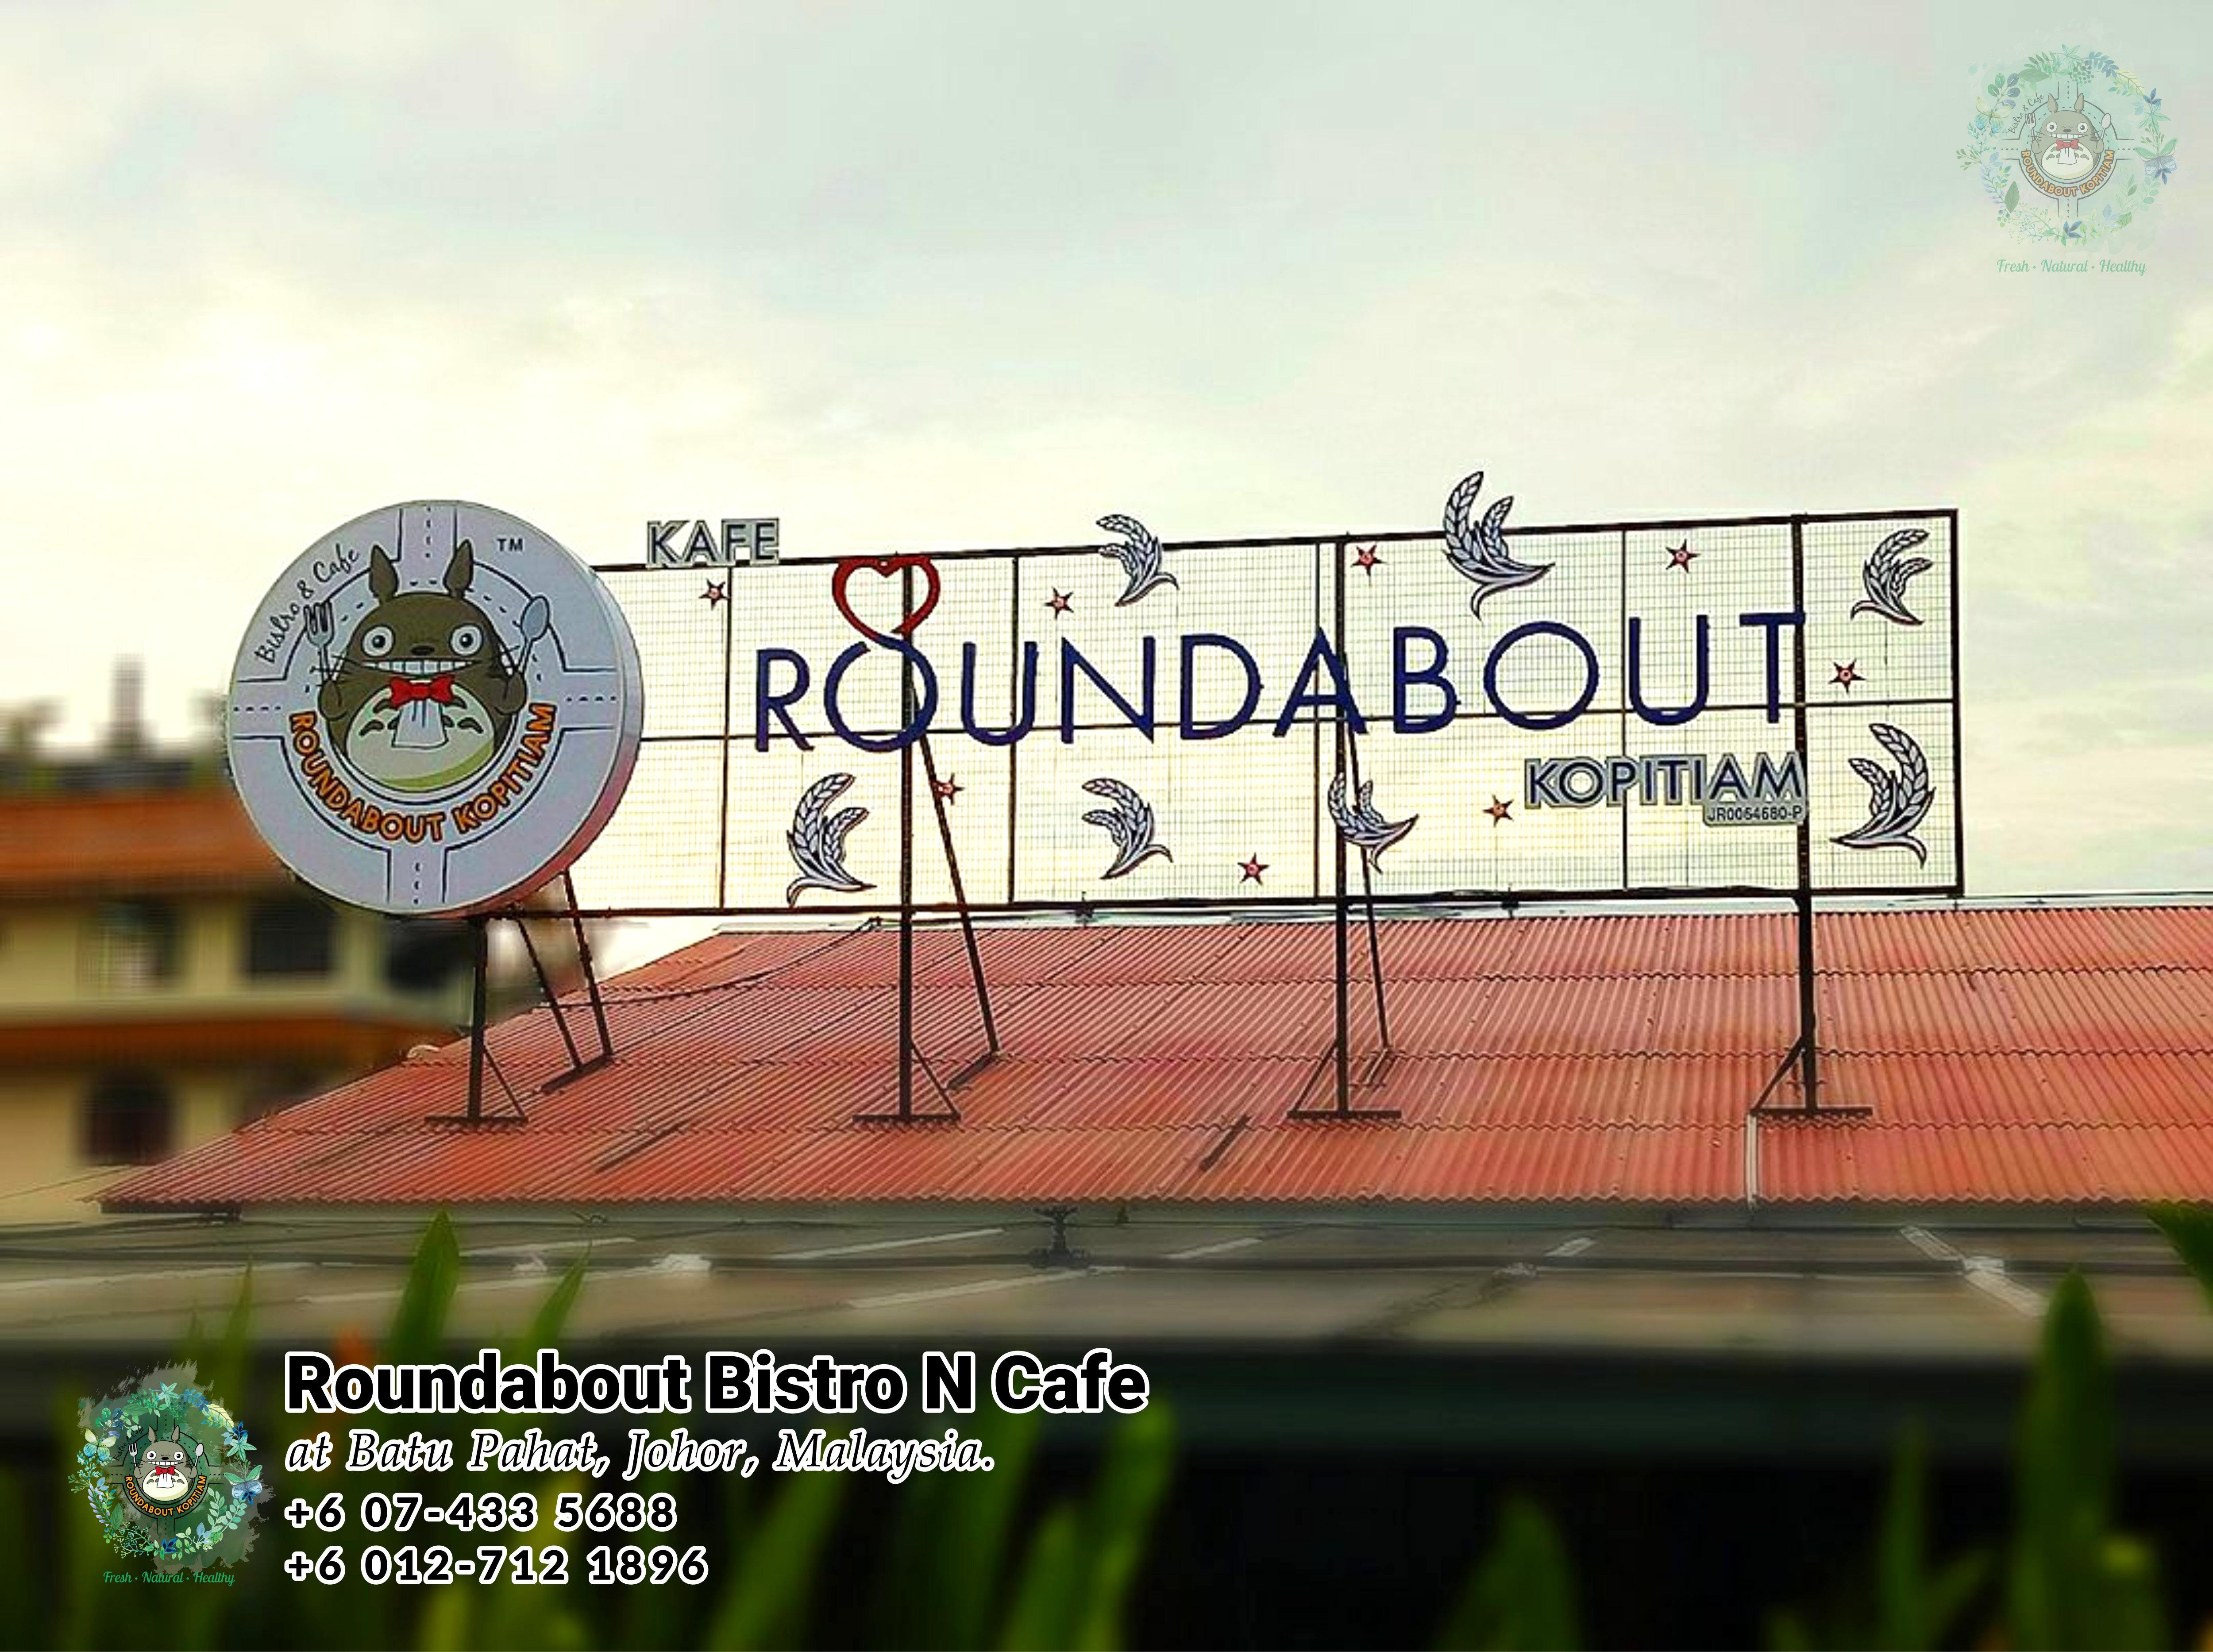 Batu Pahat Roundabout Bistro N Cafe Malaysia Johor Batu Pahat Totoro Kafe Bangunan Bersejarah Kafe Batu Pahat Landmark Bufet Hari Lahir Parti Perkahwinan Acara Kopitiam PA01-01